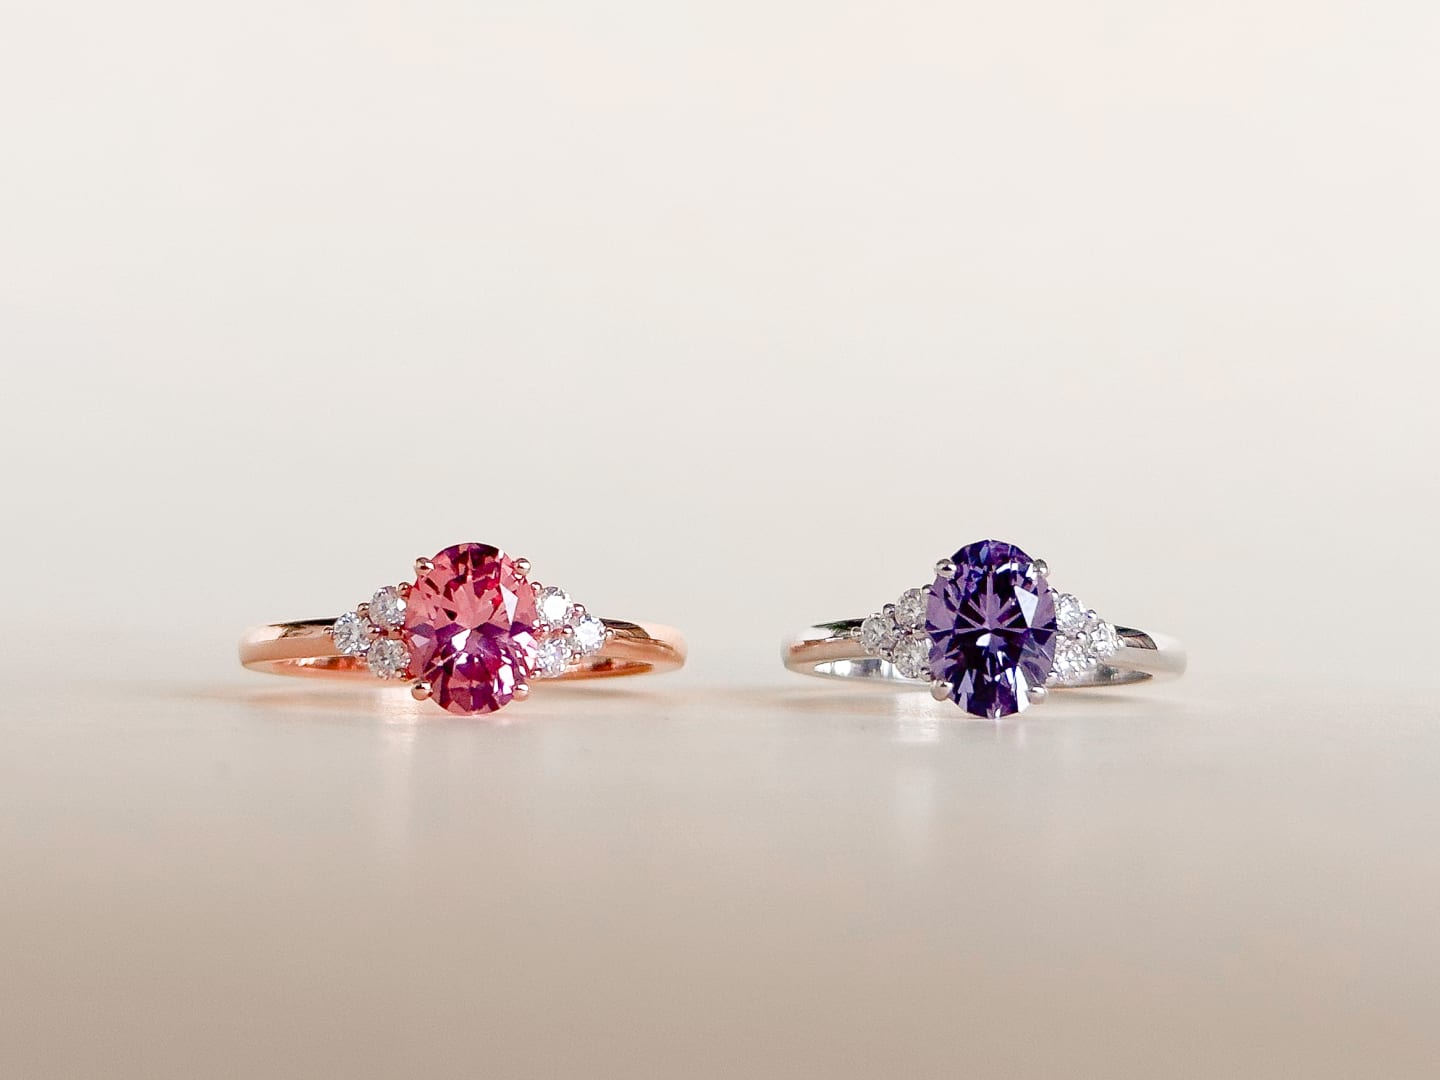 Precision cut sapphires to maximise colour and sparkle